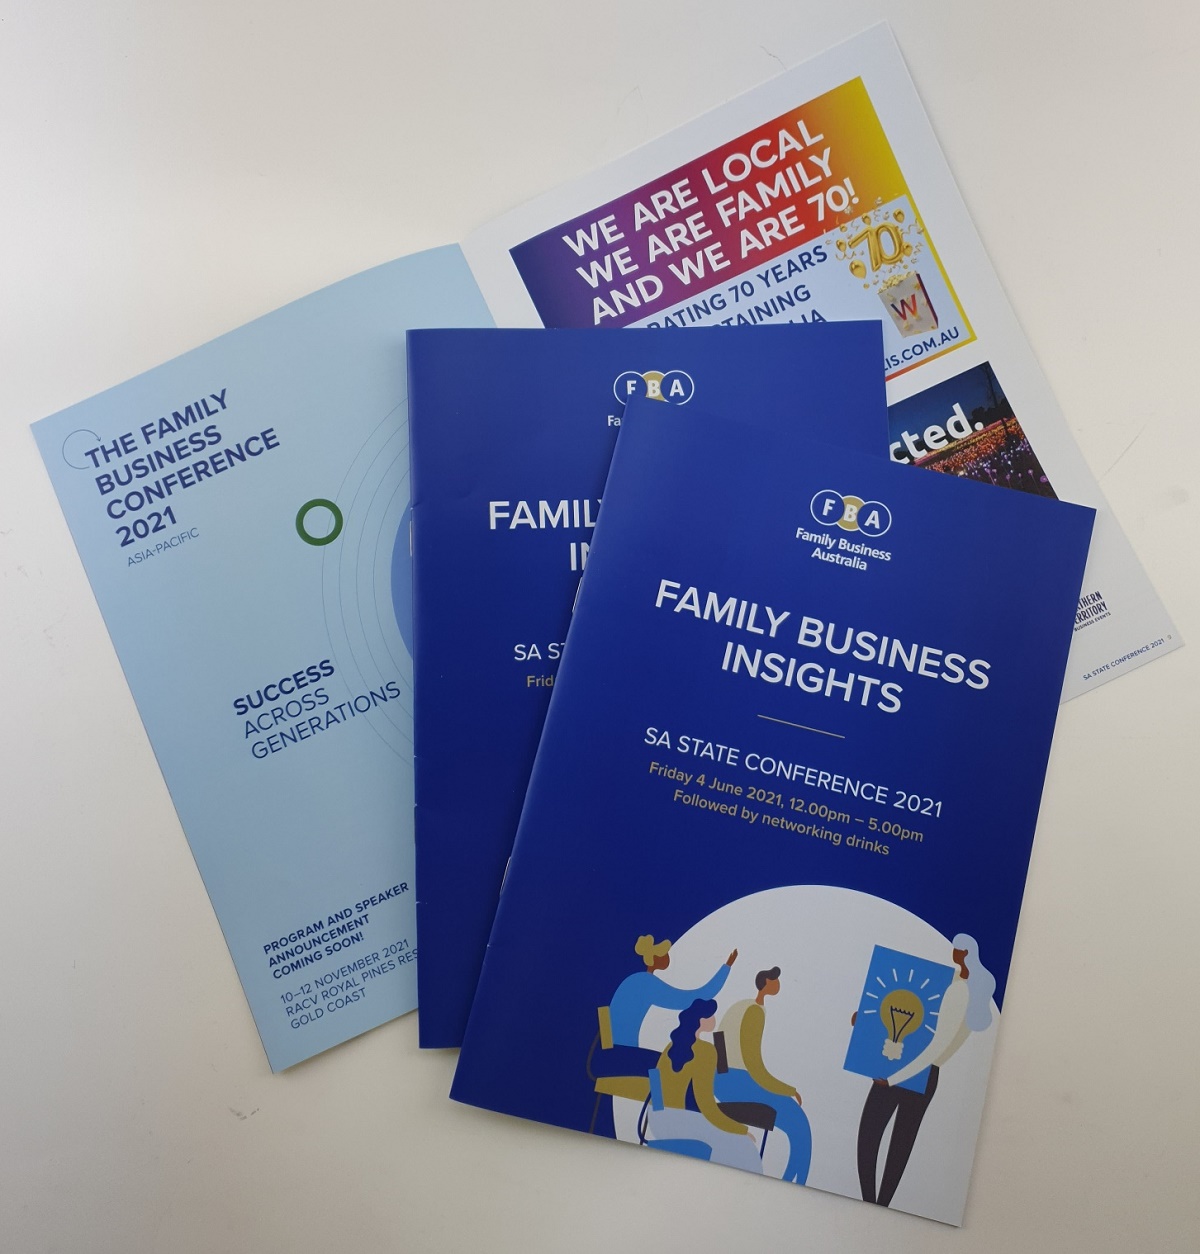 Printed brochure for Family Business Australia